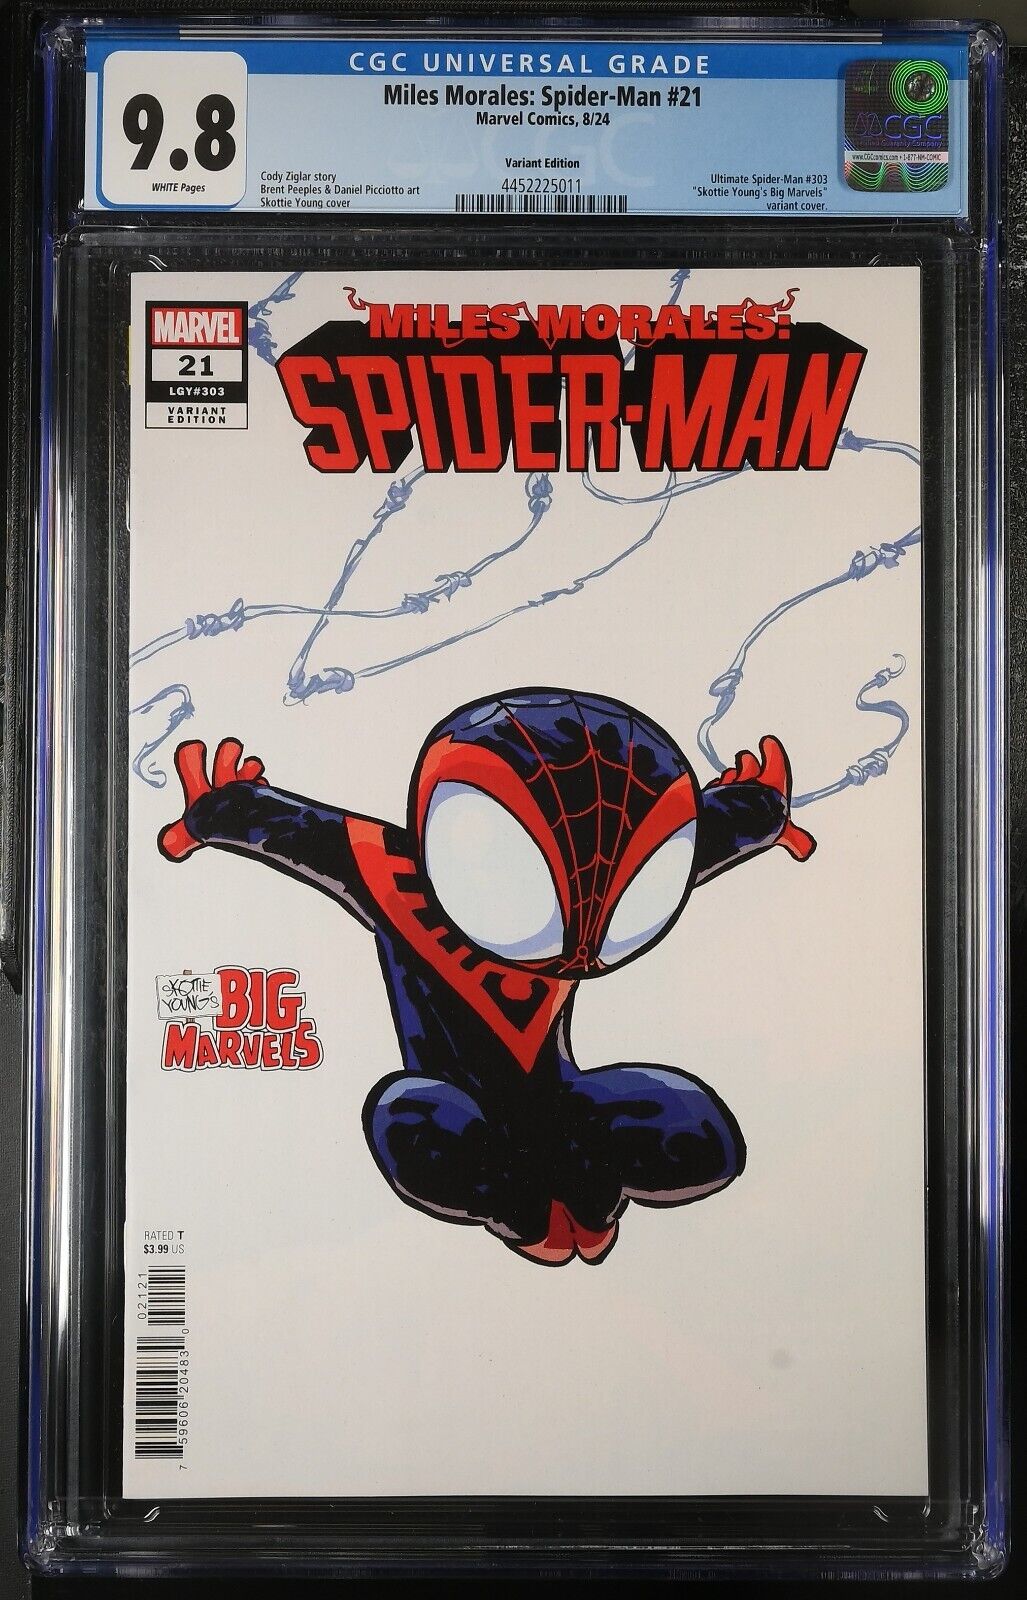 Miles Morales: Spider-Man #21 (Big Marvels Variant) [CGC Graded 9.8]